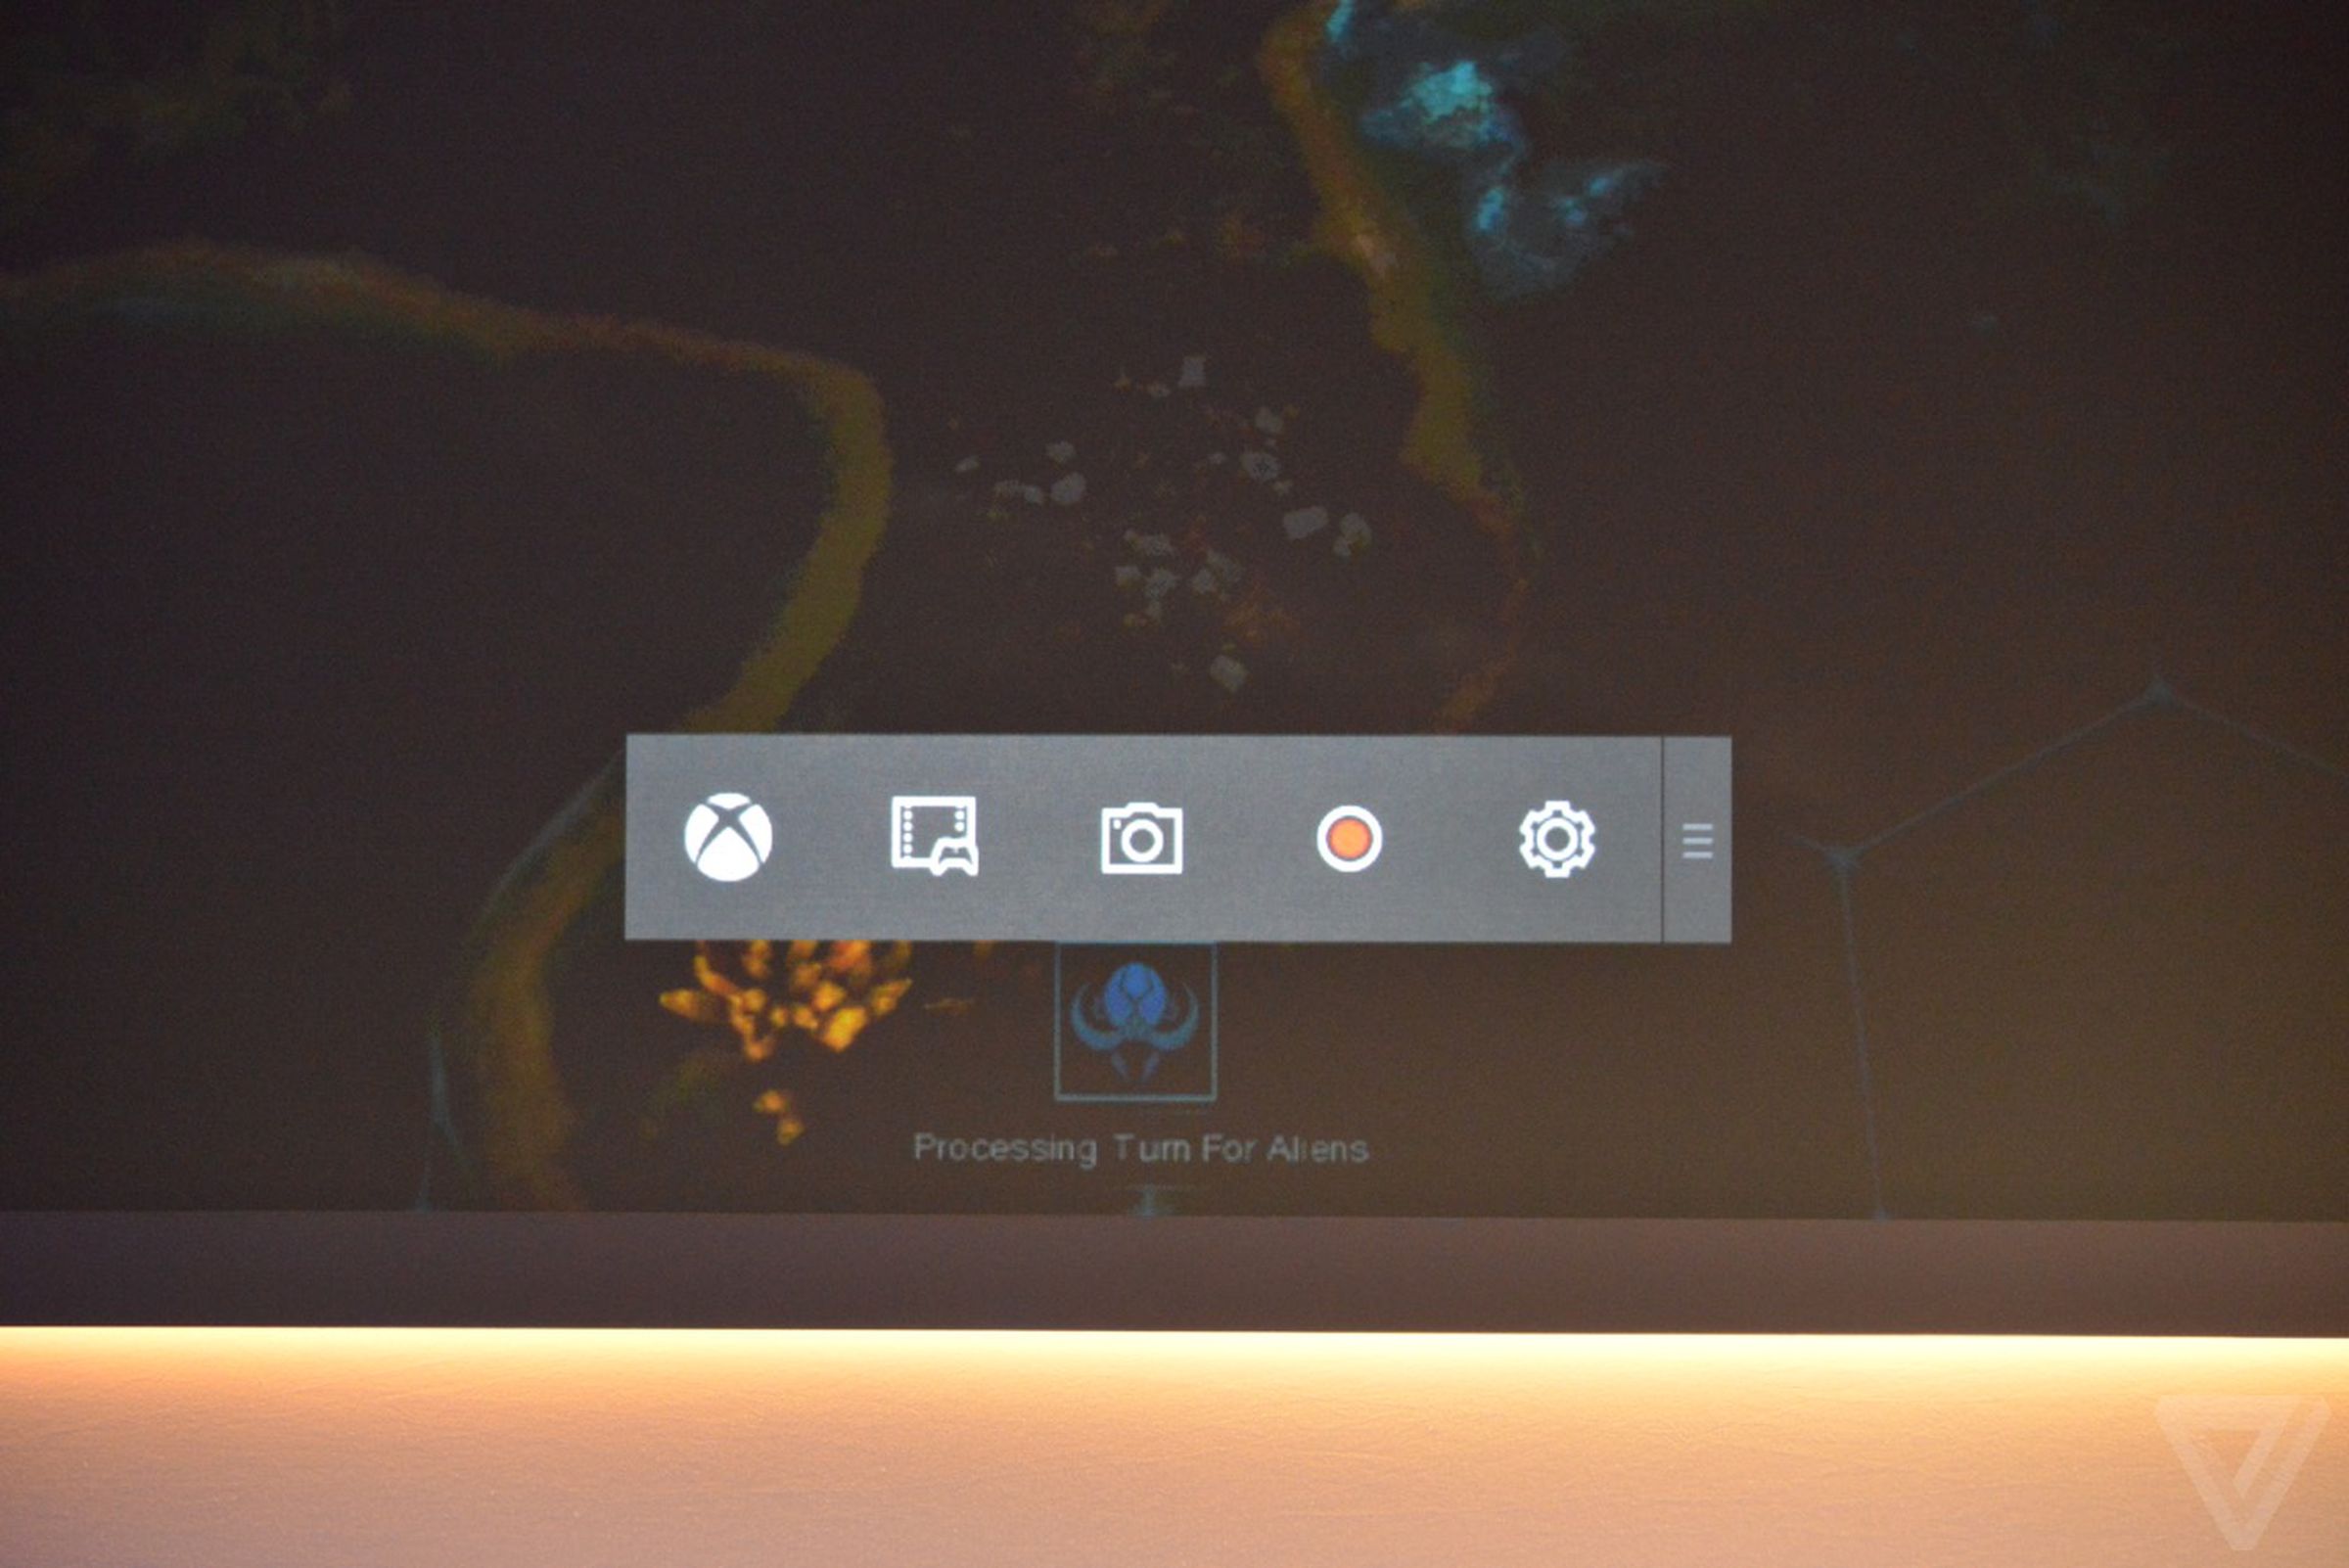 Microsoft Windows 10 Xbox app in photos